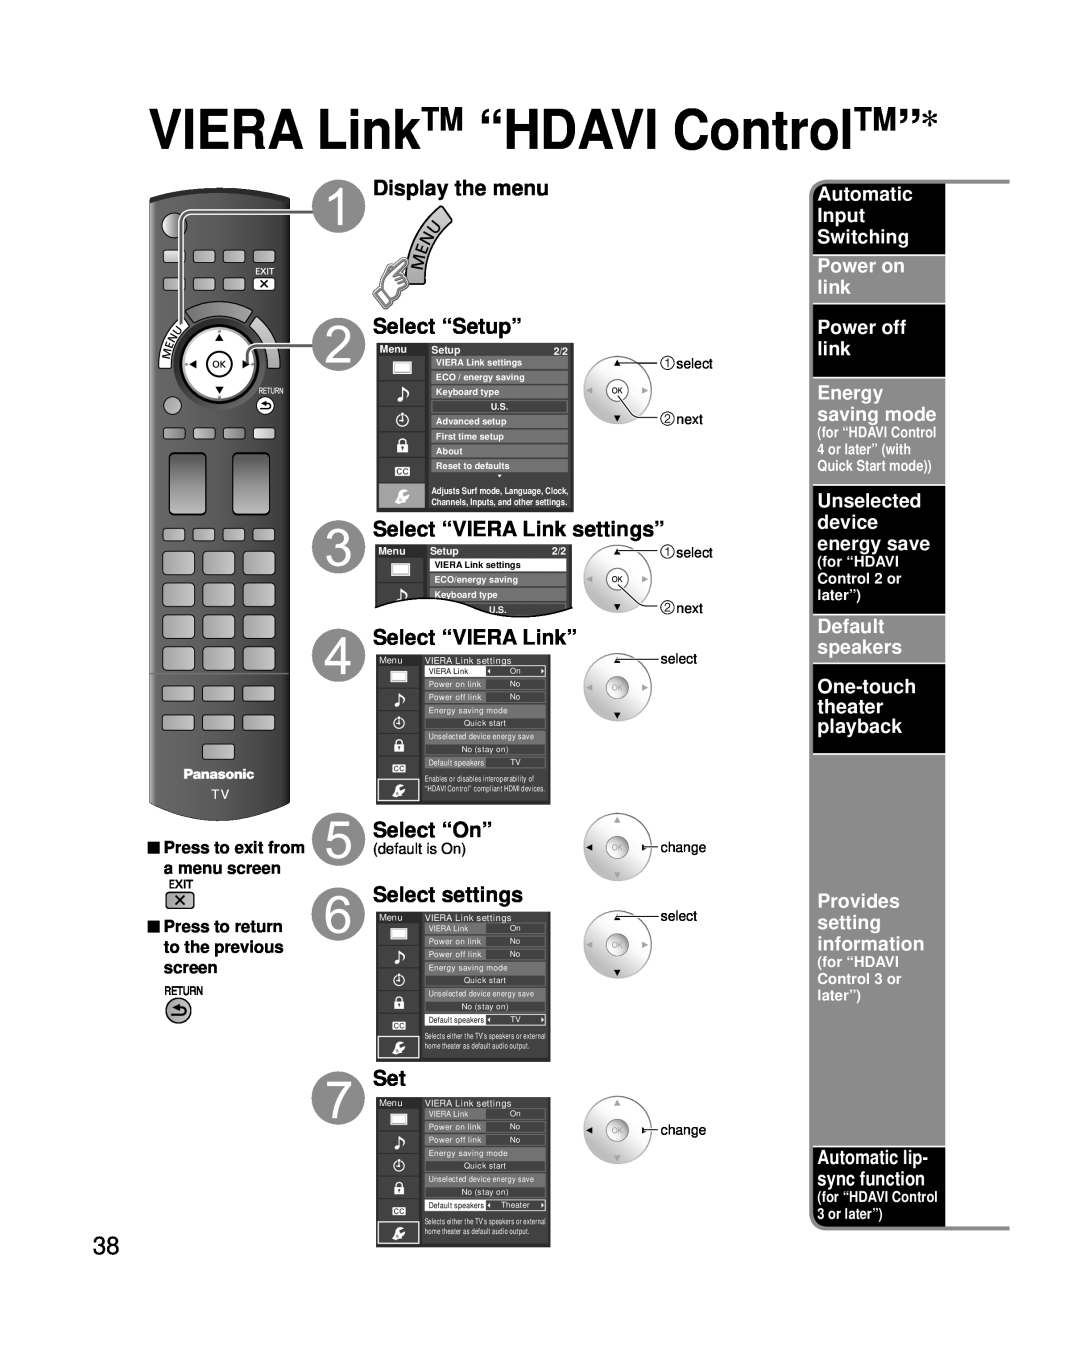 Panasonic TC-P50G25 Select “VIERA Link settings”, Select “VIERA Link”, Select “On”, VIERA LinkTM “HDAVI ControlTM” 